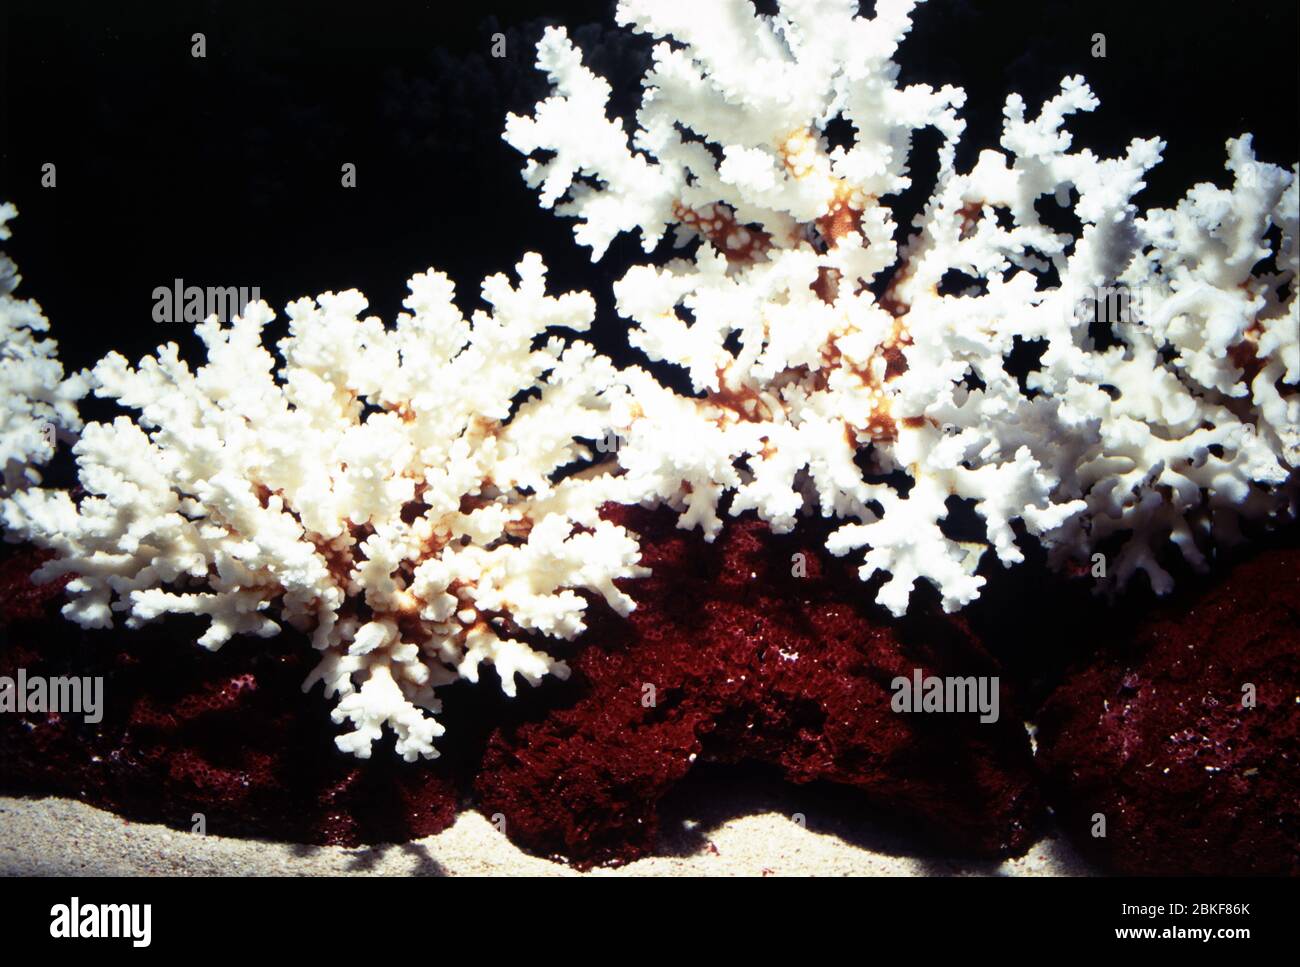 Aquarium decoration with coral skeletons Stock Photo